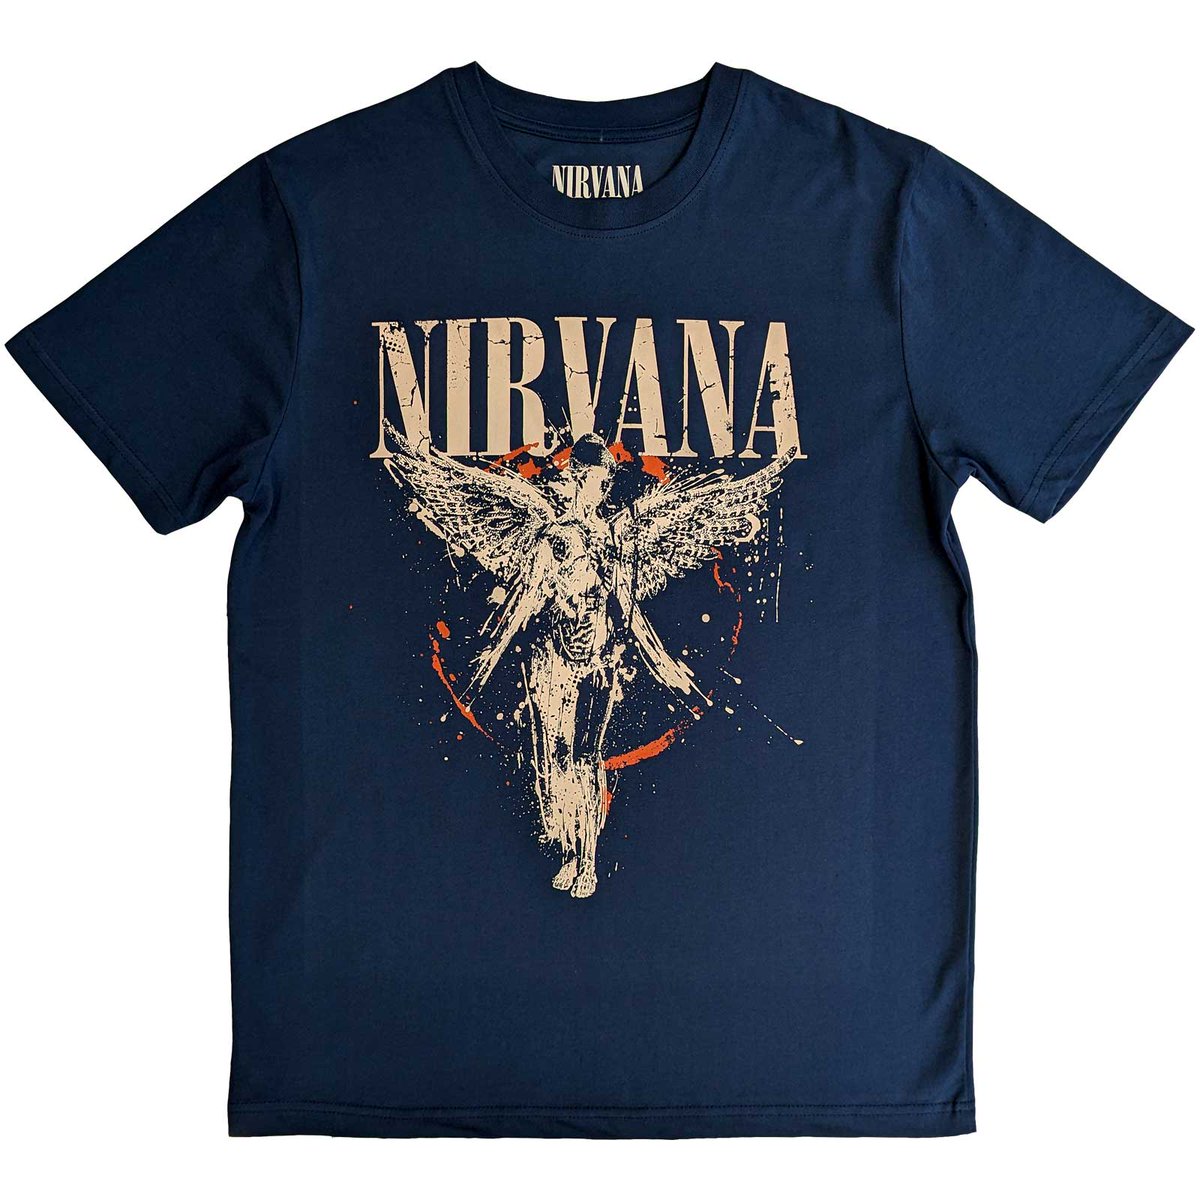 👉️ fuzz-bayonne.com/produit/nirvan… 👕

#Nirvana #InUtero #BandMerch #MusicMerch #BandTee #GrungeFashion #UnisexFashion #RockFashion #NirvanaFans #MusicFashion #RockLegends #90sRock #BandApparel #TshirtCollection #NirvanaLove #KurtCobain #RockMerch #GrungeStyle #MusicLegends